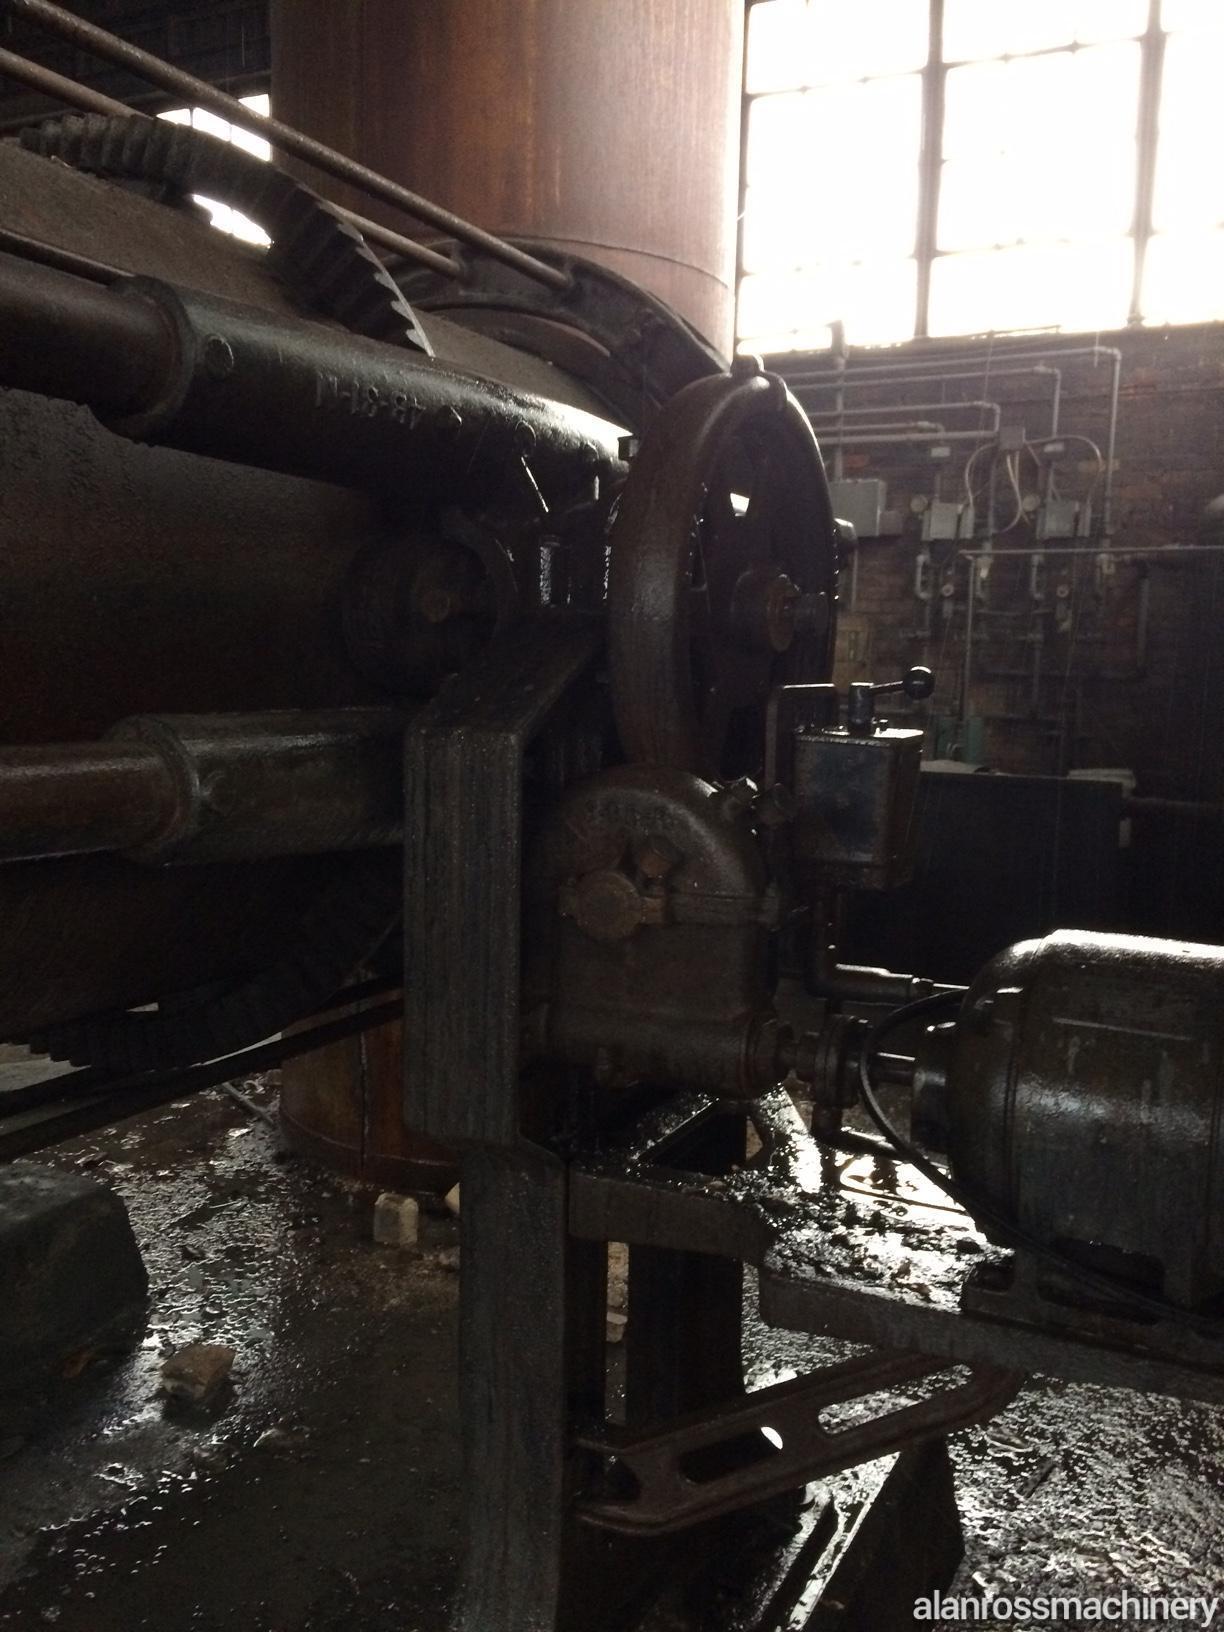 US Furnace 2 Furnaces & Kilns | Alan Ross Machinery